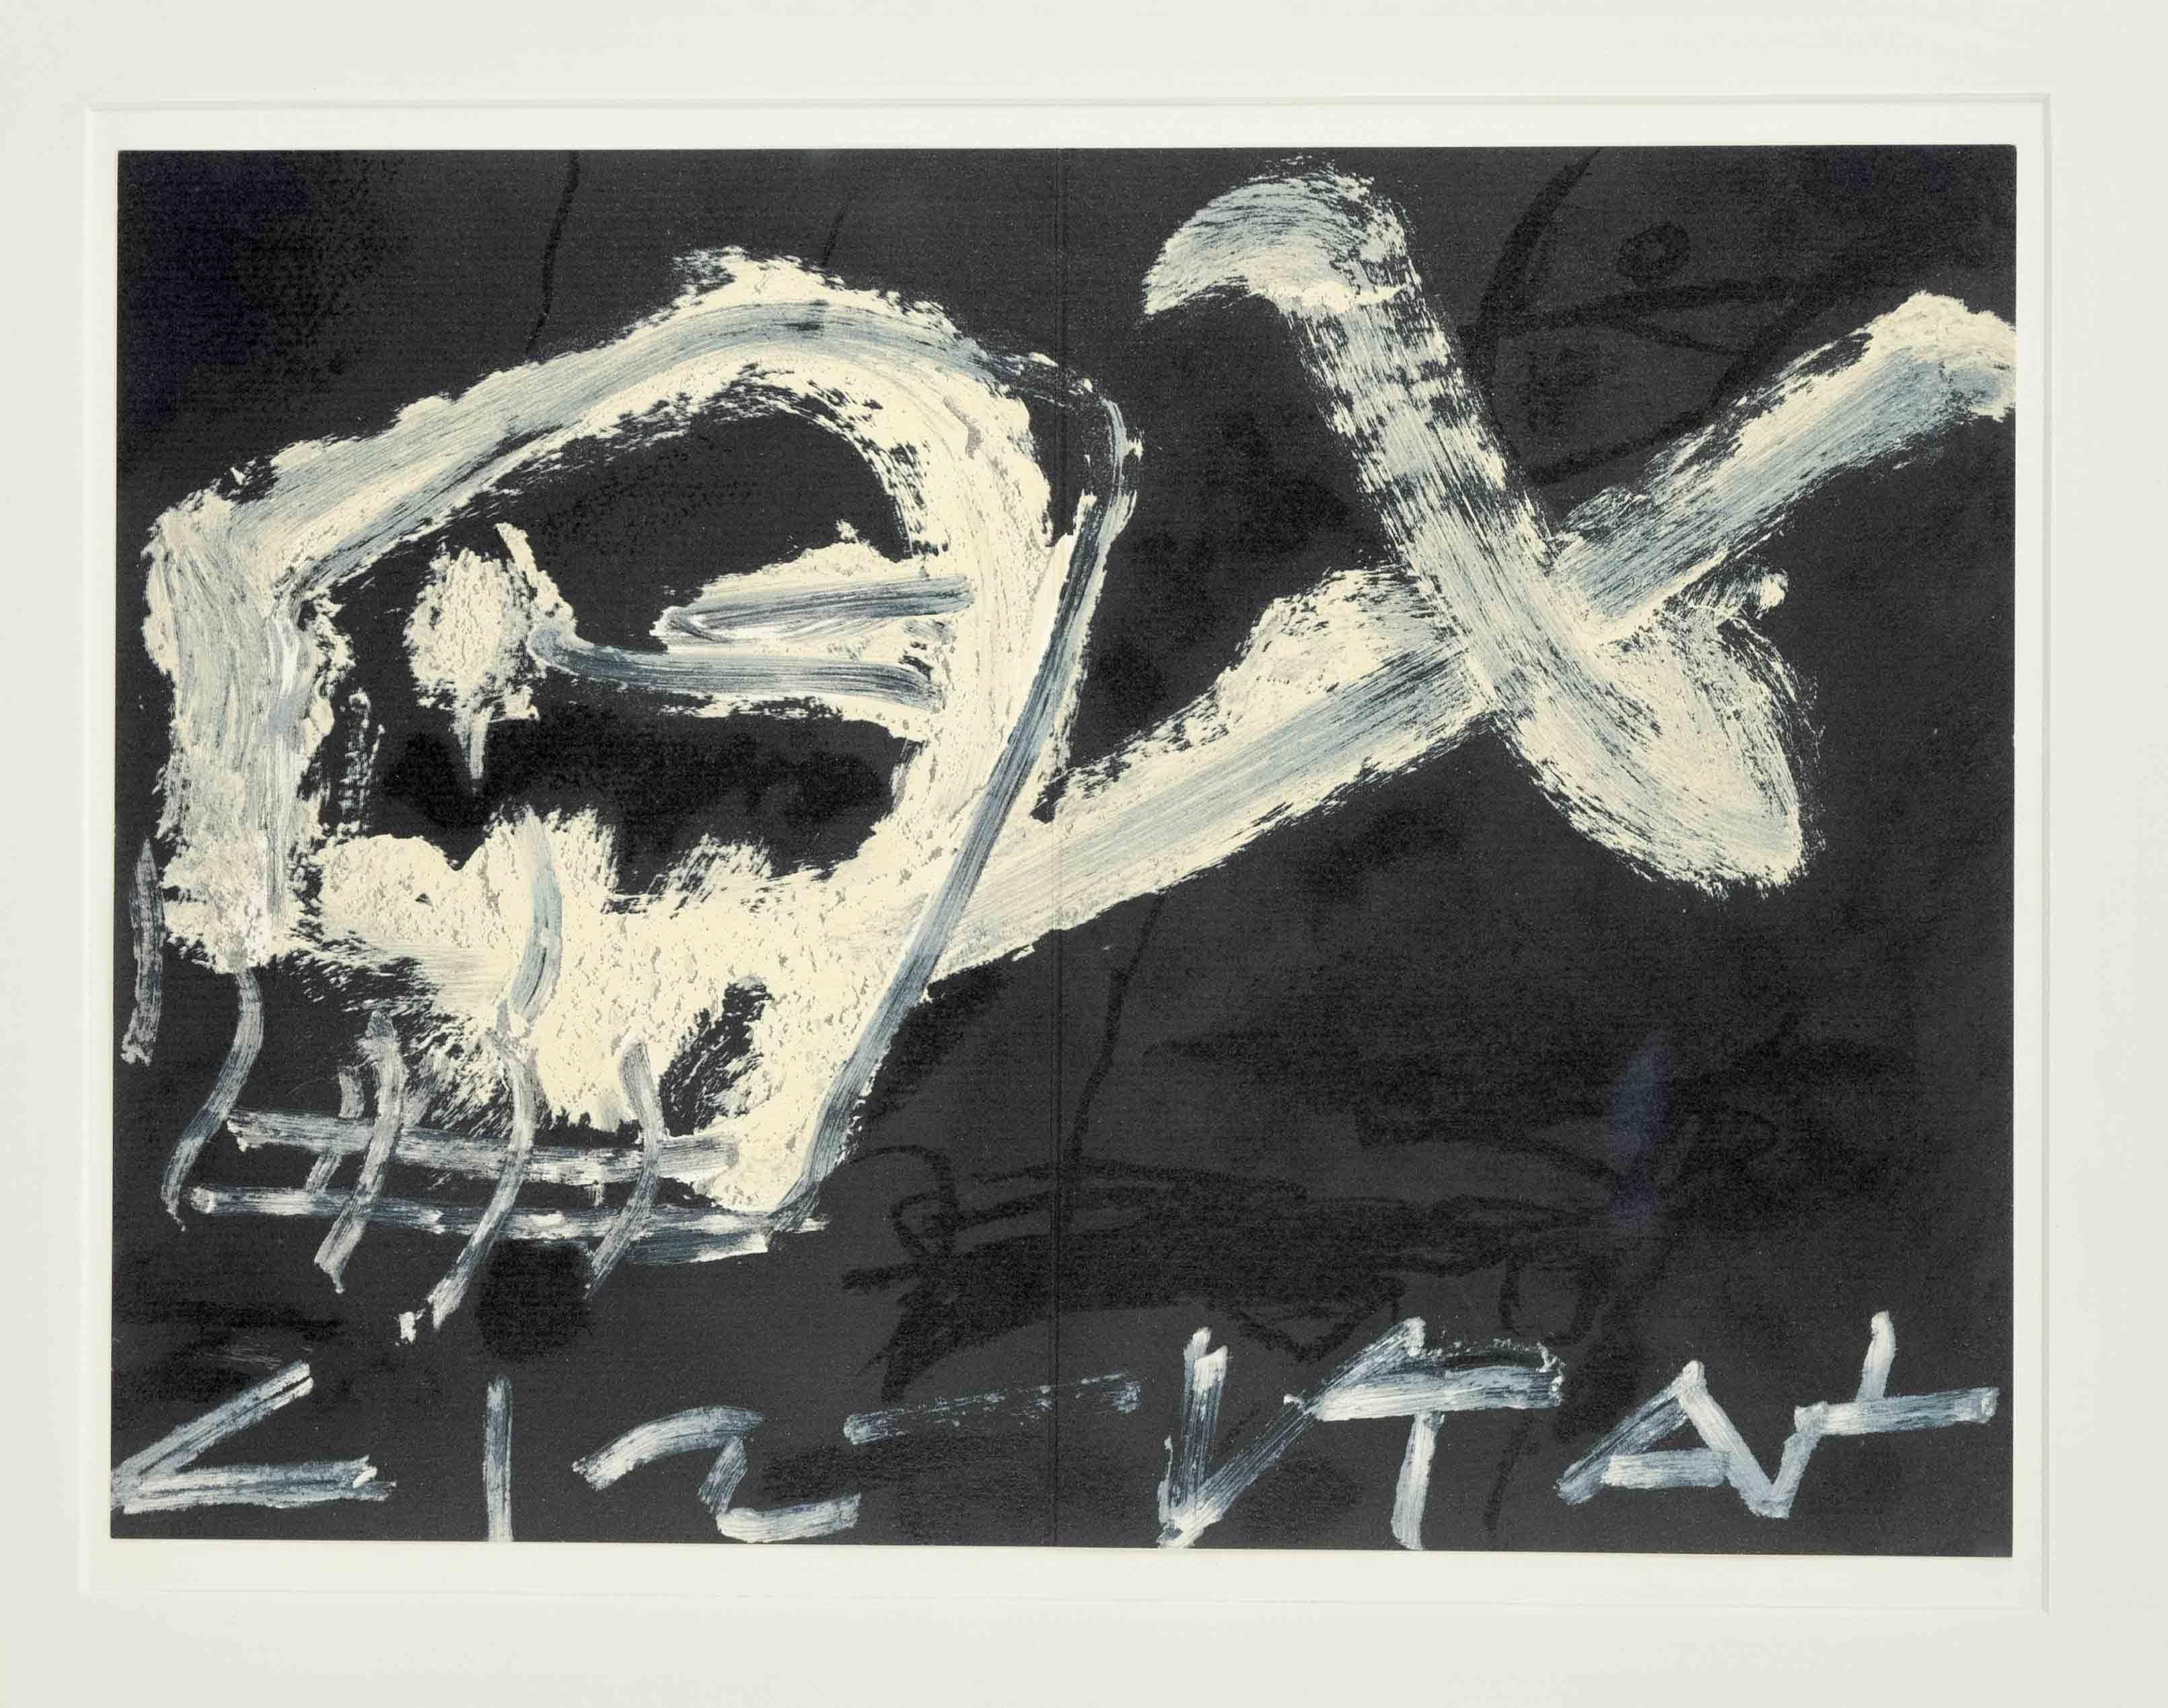 Untitled by Antoni Tàpies, 1986